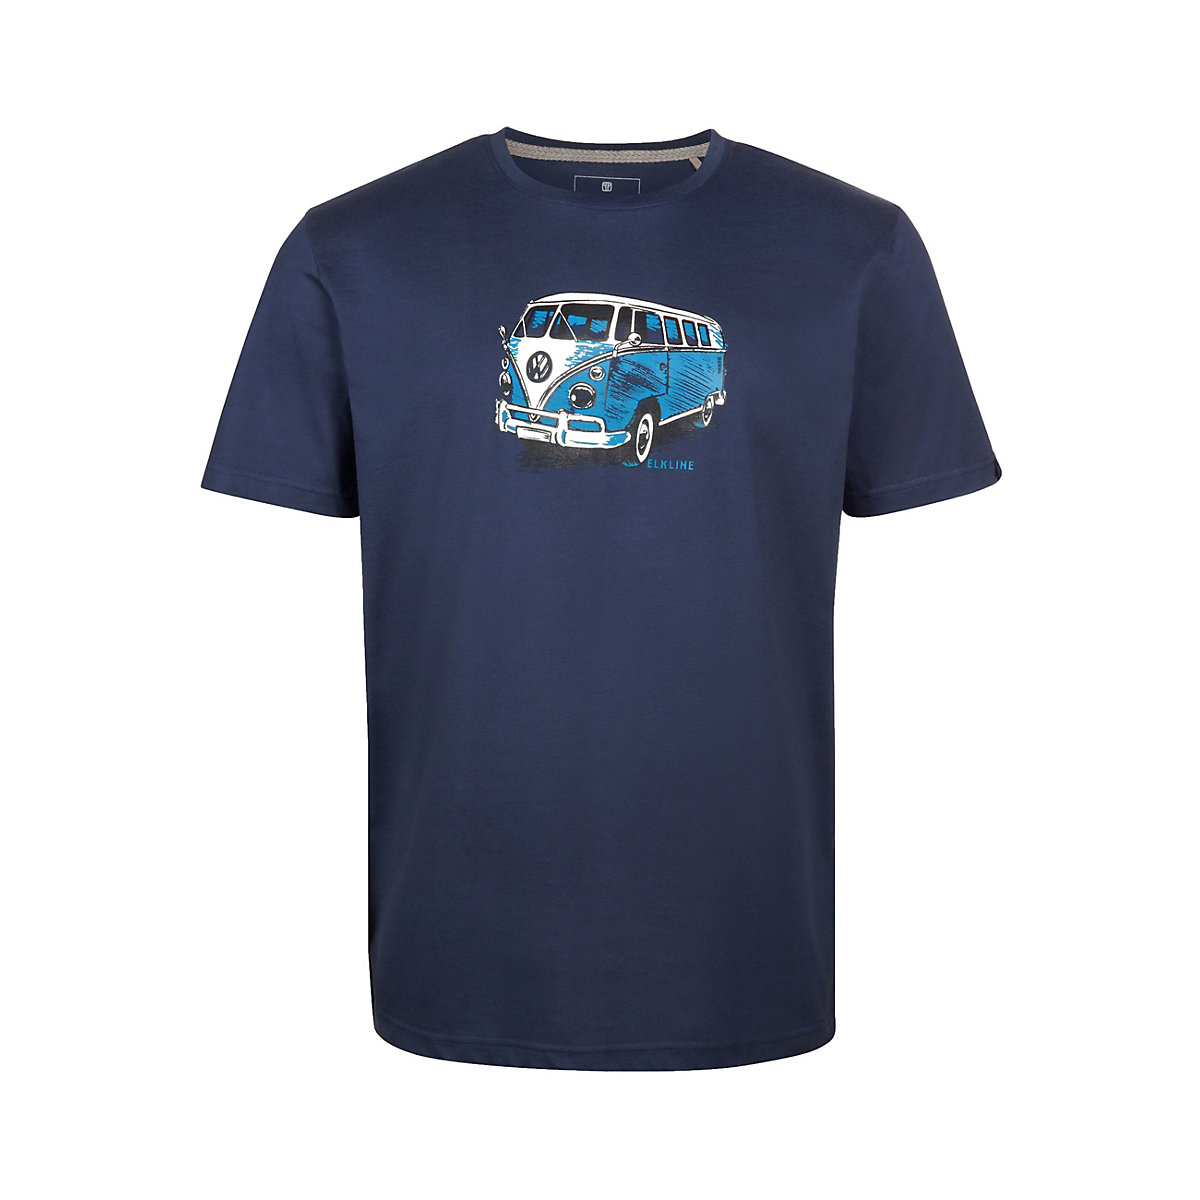 elkline T-Shirt Gassenhauer VW Bulli Print dunkelblau